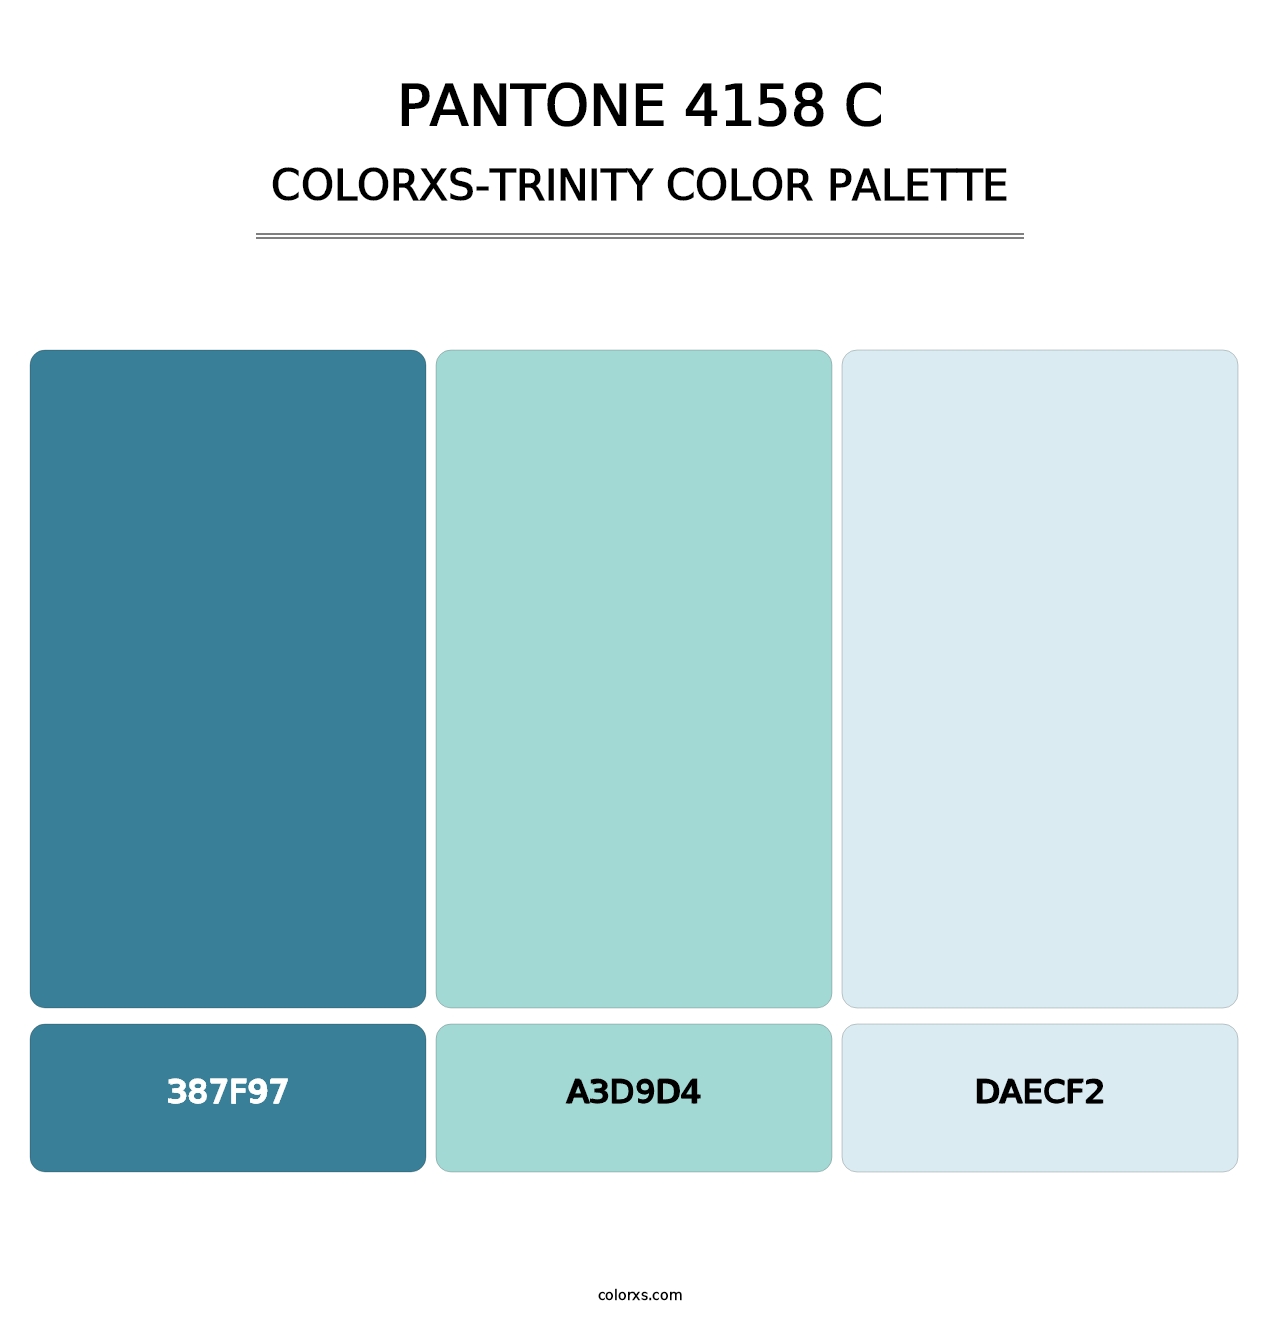 PANTONE 4158 C - Colorxs Trinity Palette